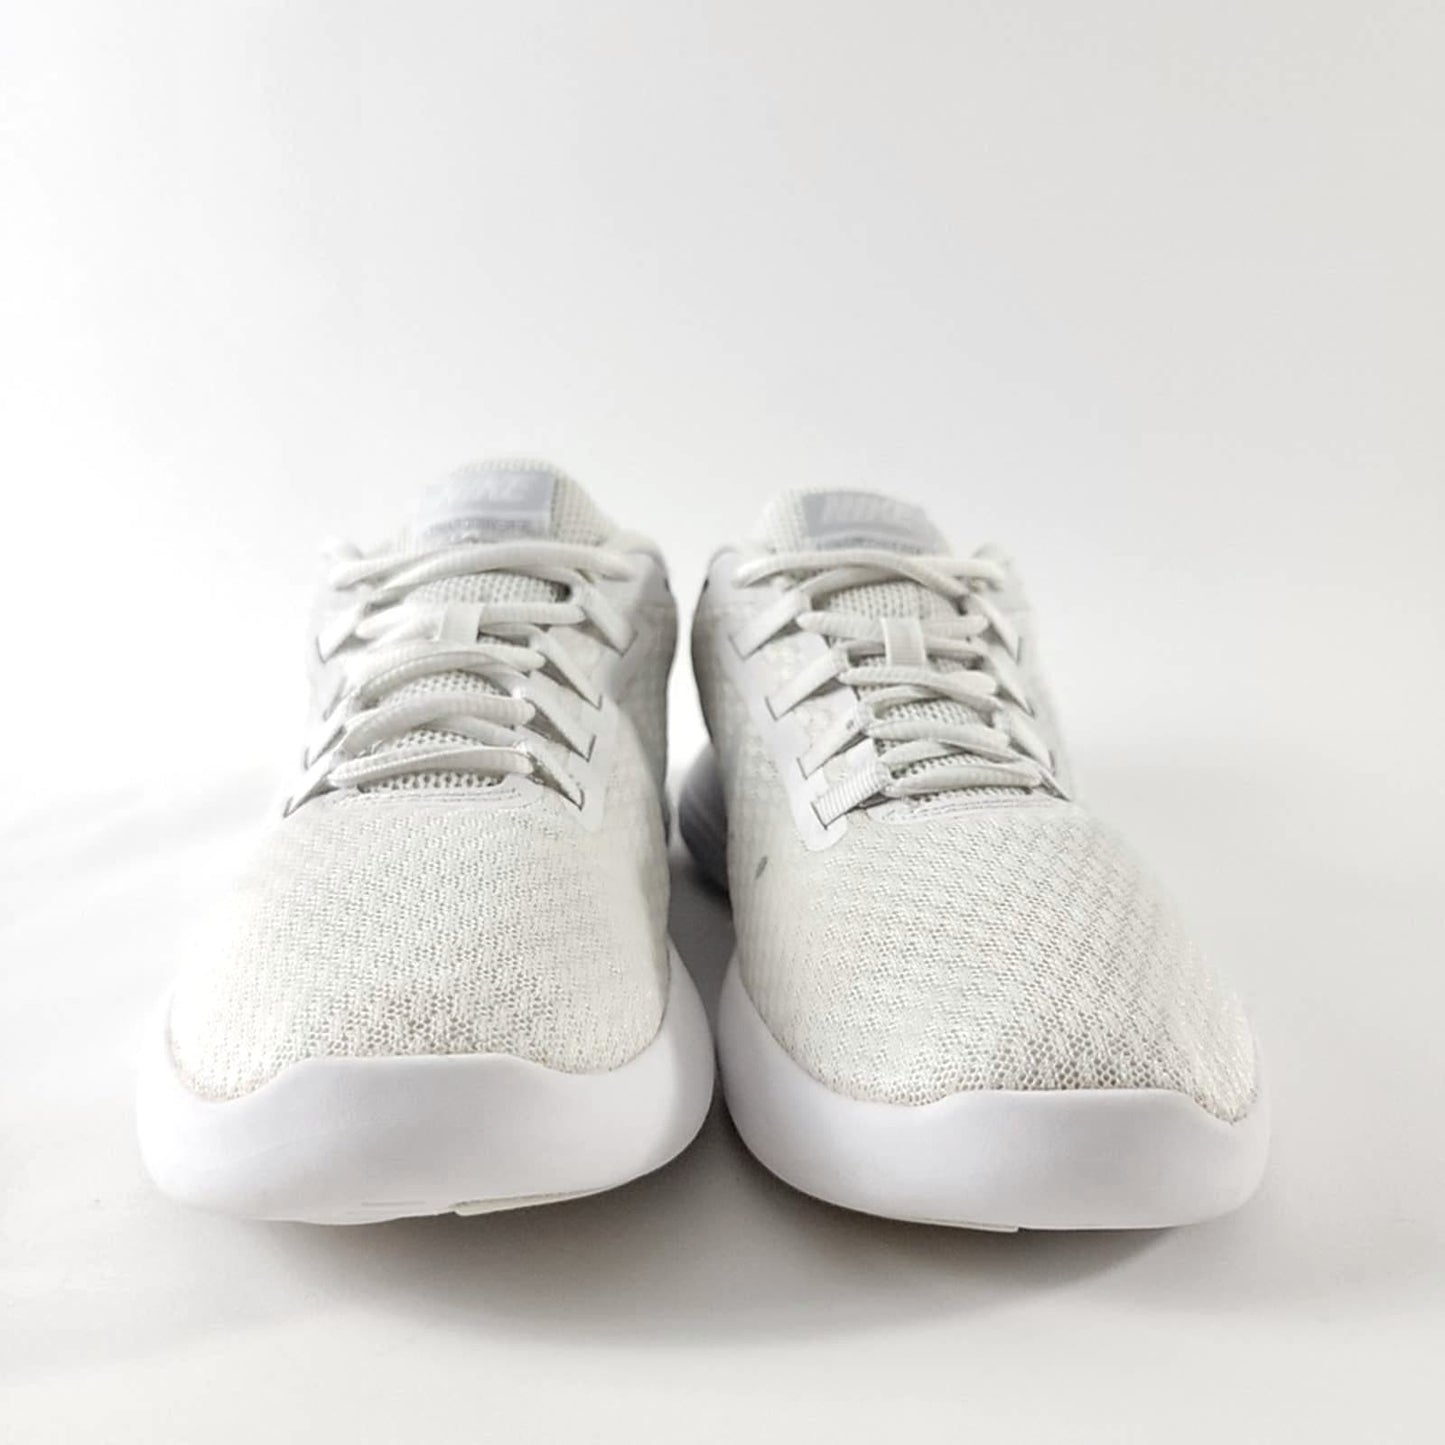 Nike LunarConverge Running Shoes - 8/9.5